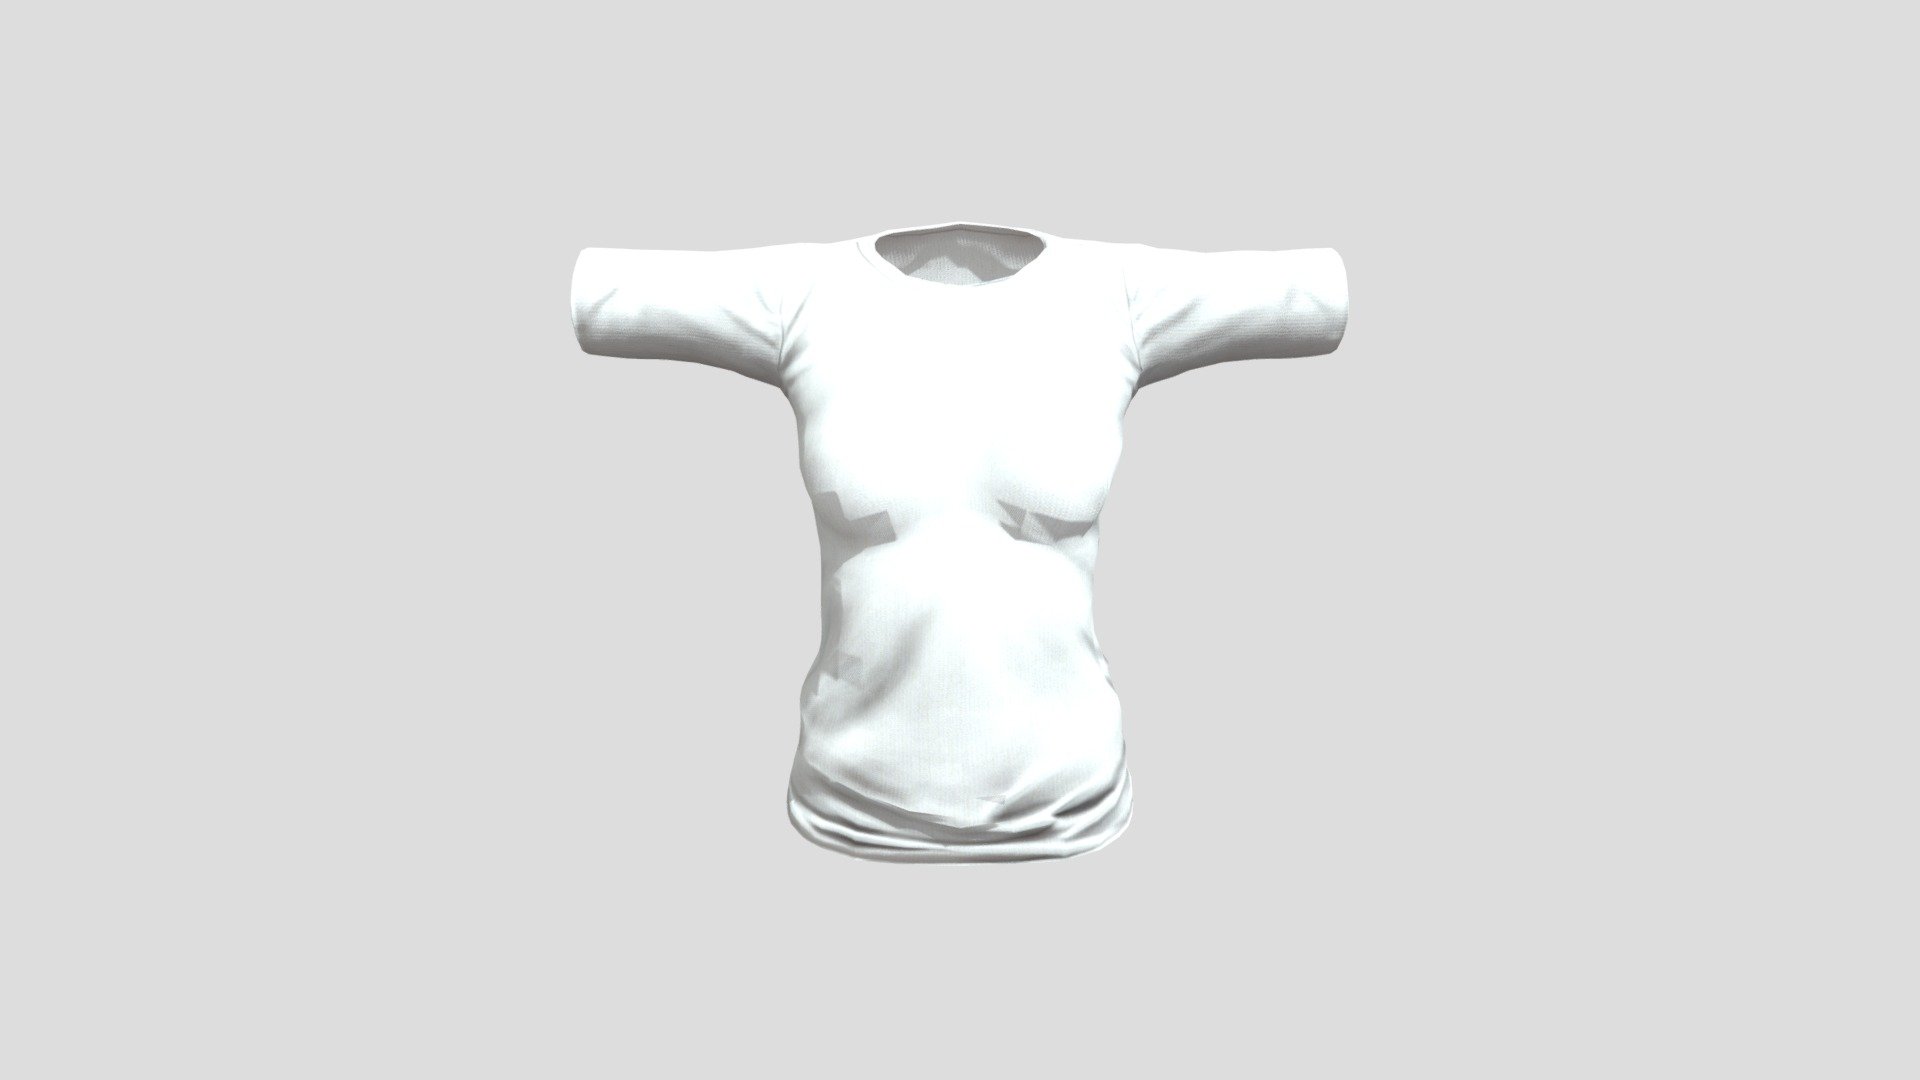 T-shirt Pose - Download Free 3D CG2011 (@CG2011) [2acfb6d]